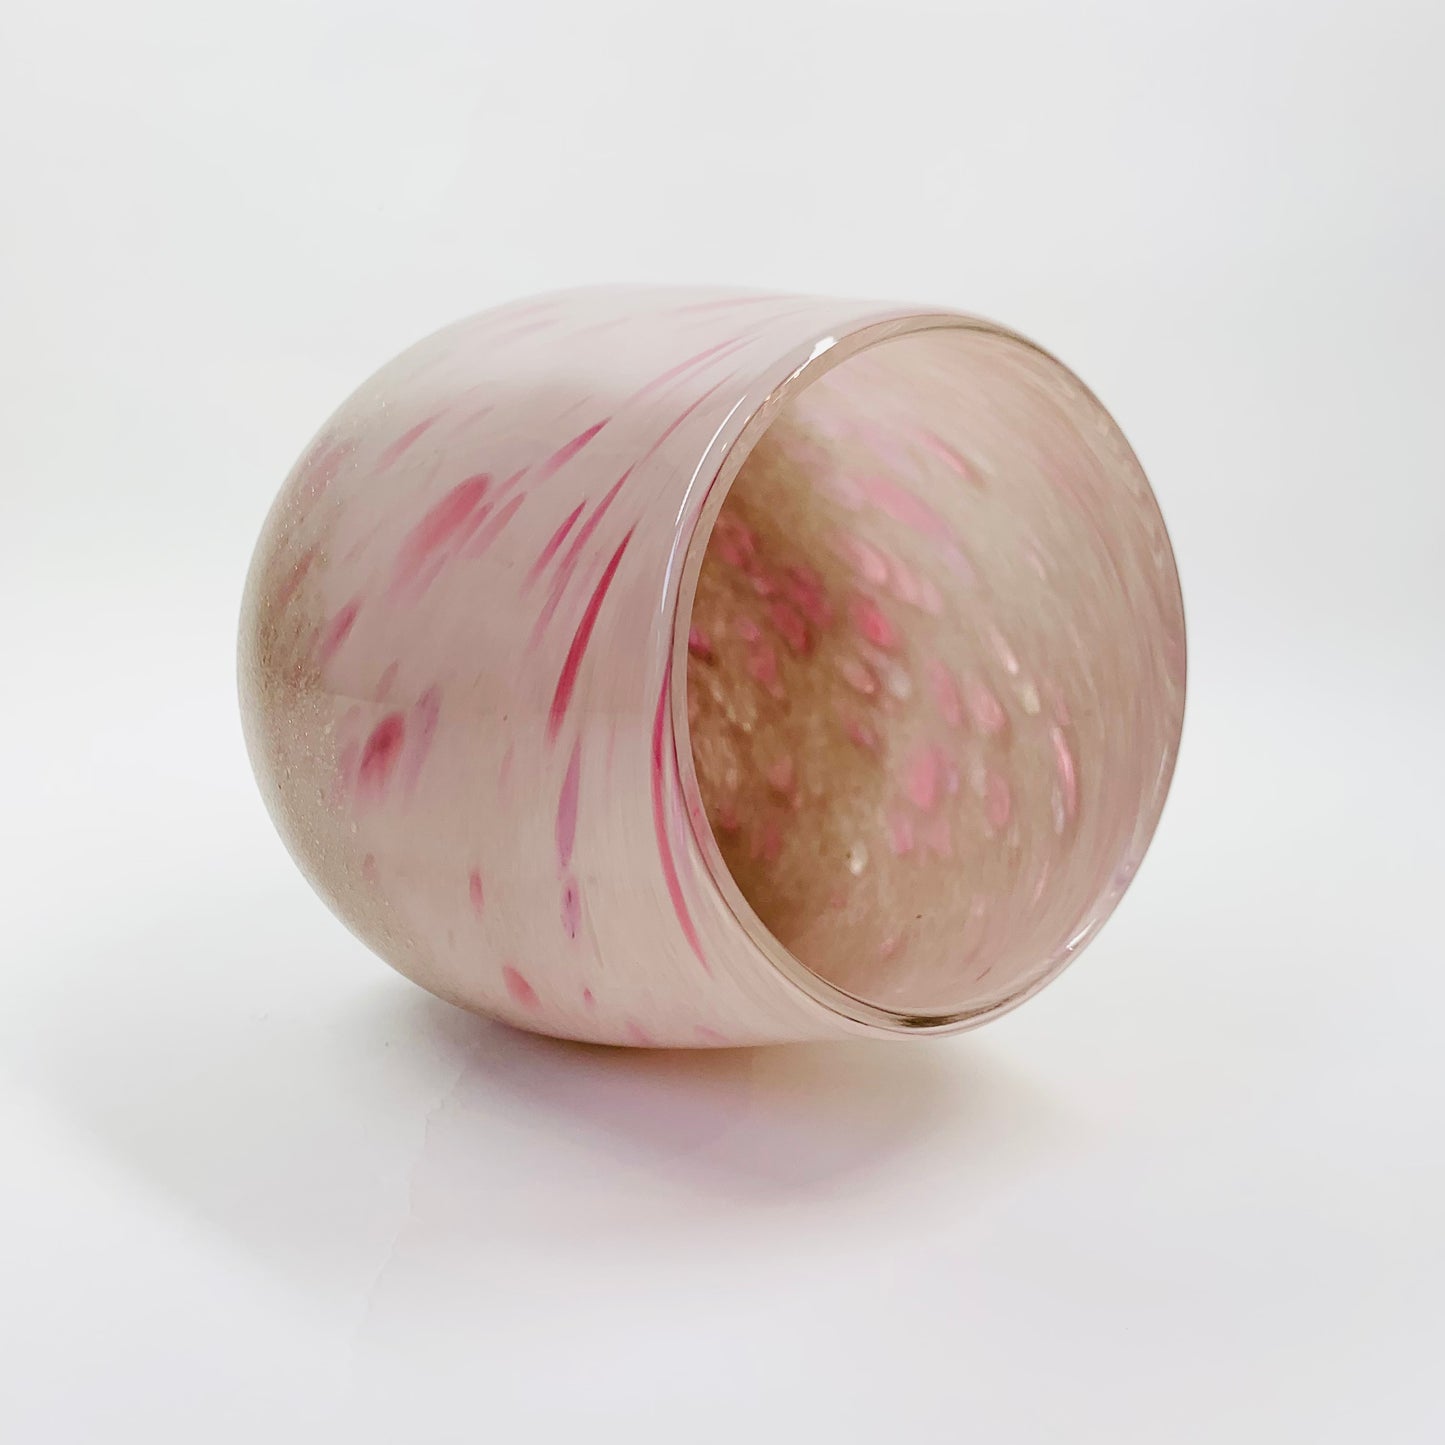 1980s cased pink speckled art glass vase with gold aventurine